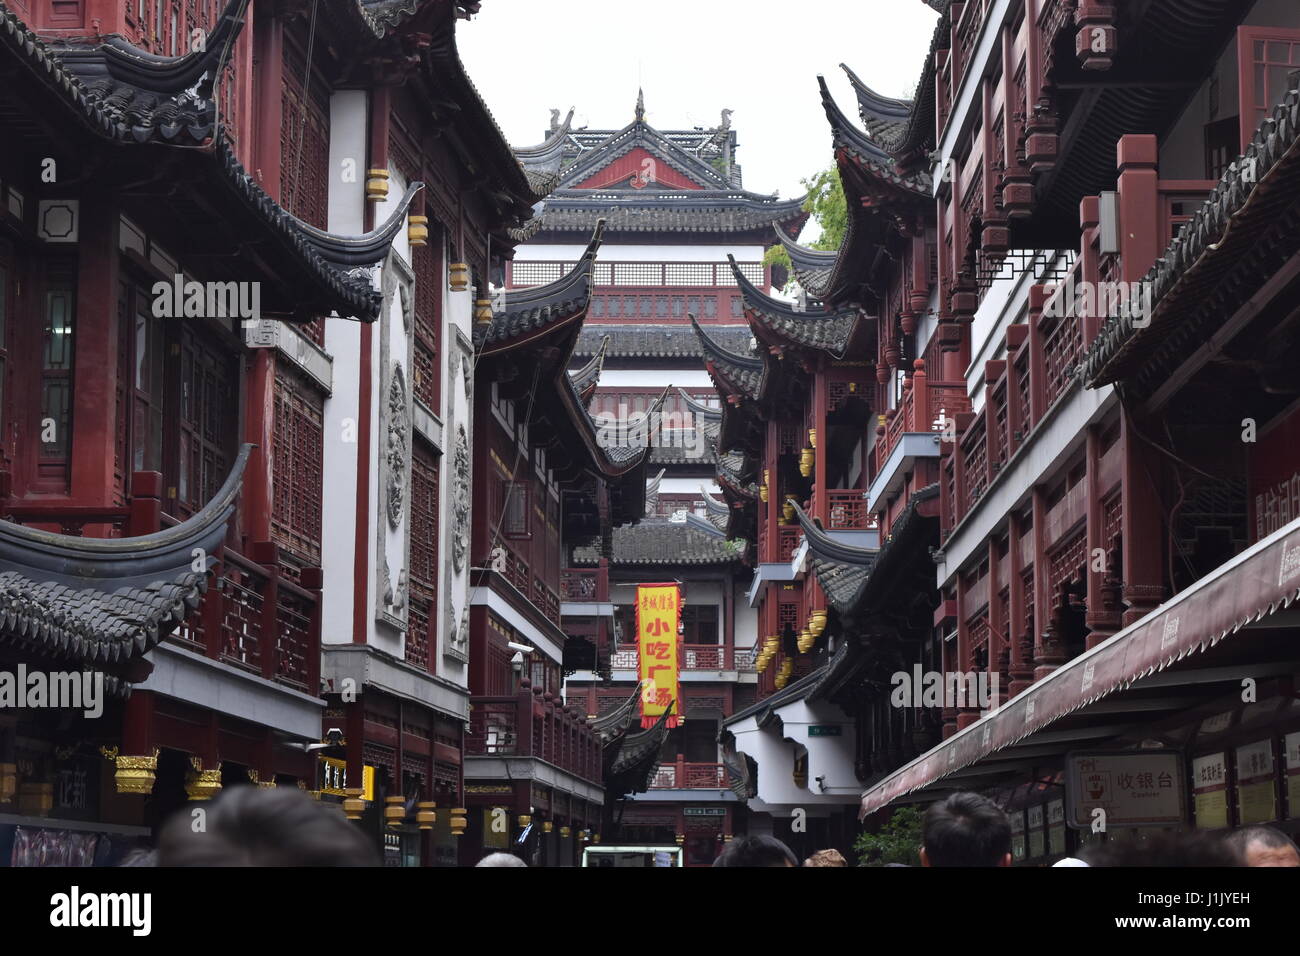 Shanghai traditional Yu garden market alley and wooden facades - China Stock Photo